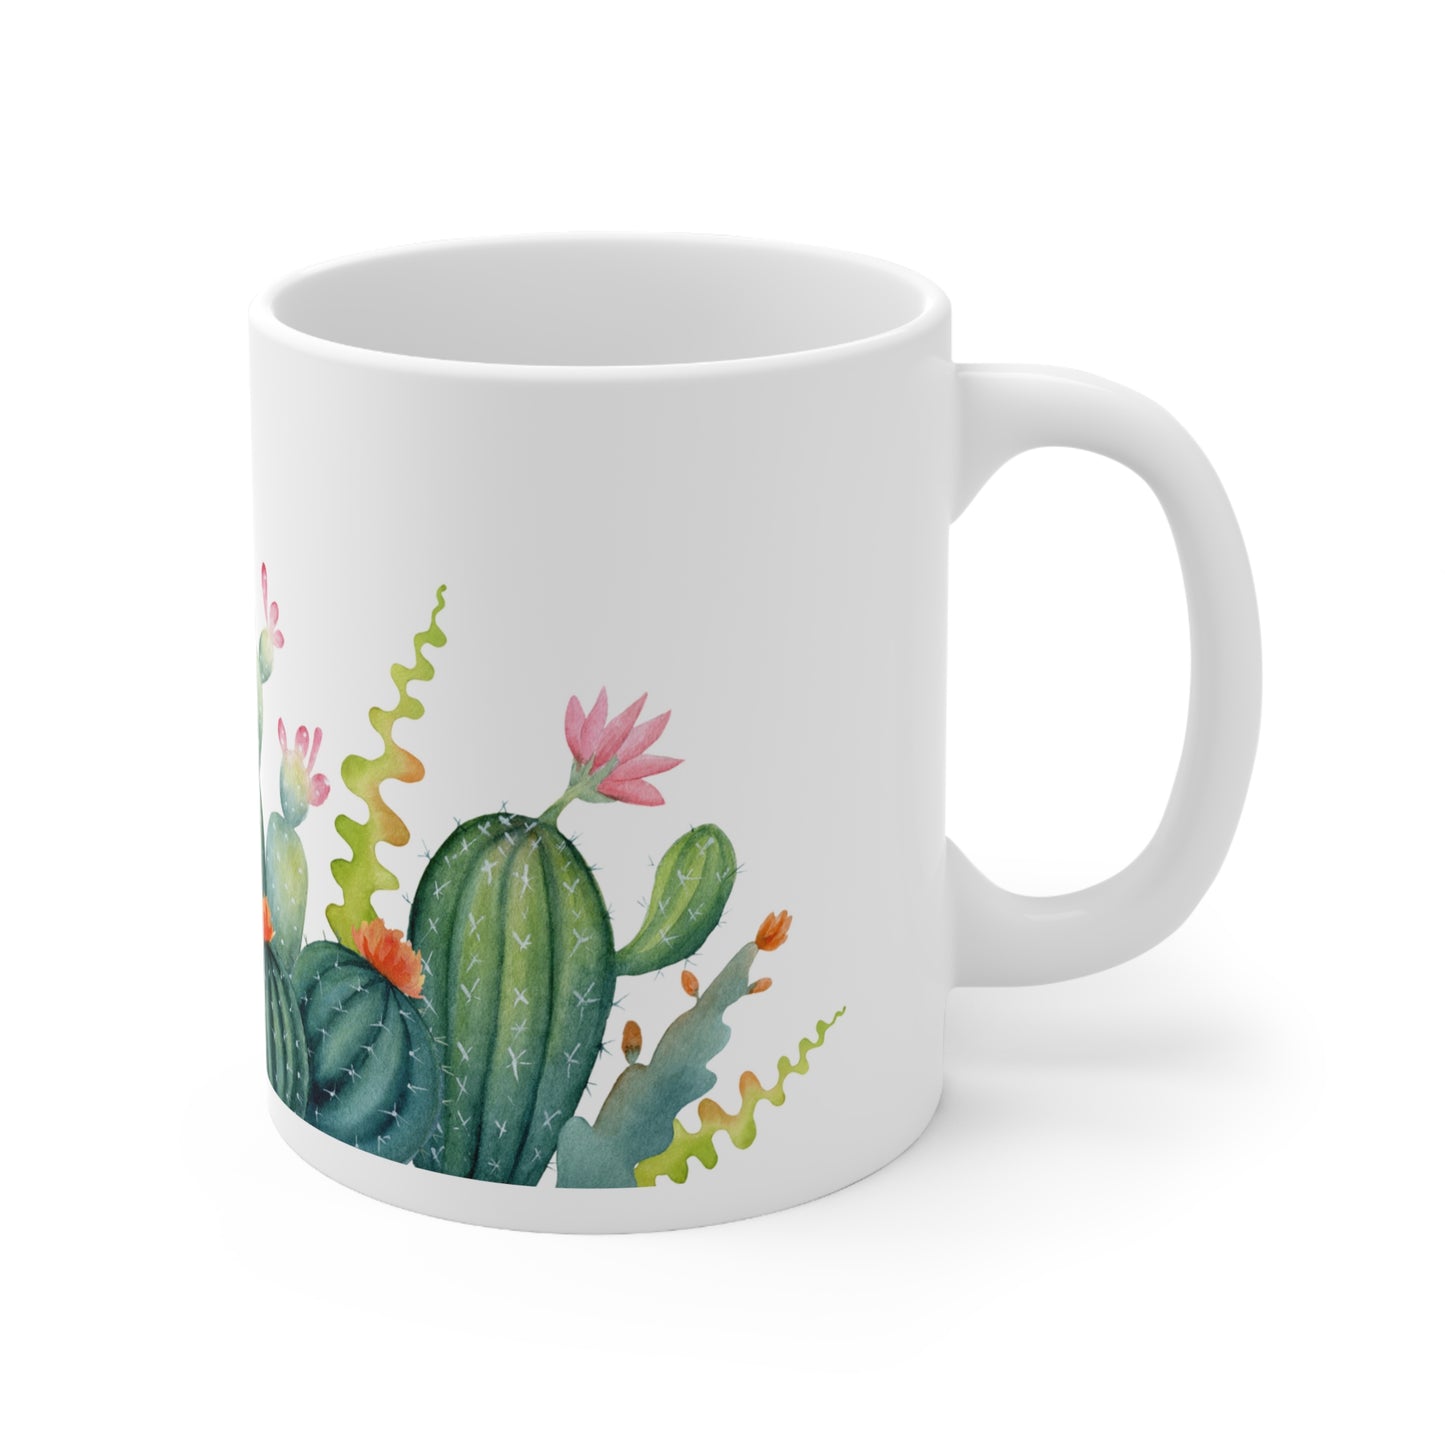 Introducing the Perfect 11oz Ceramic Mug with Cactus Print